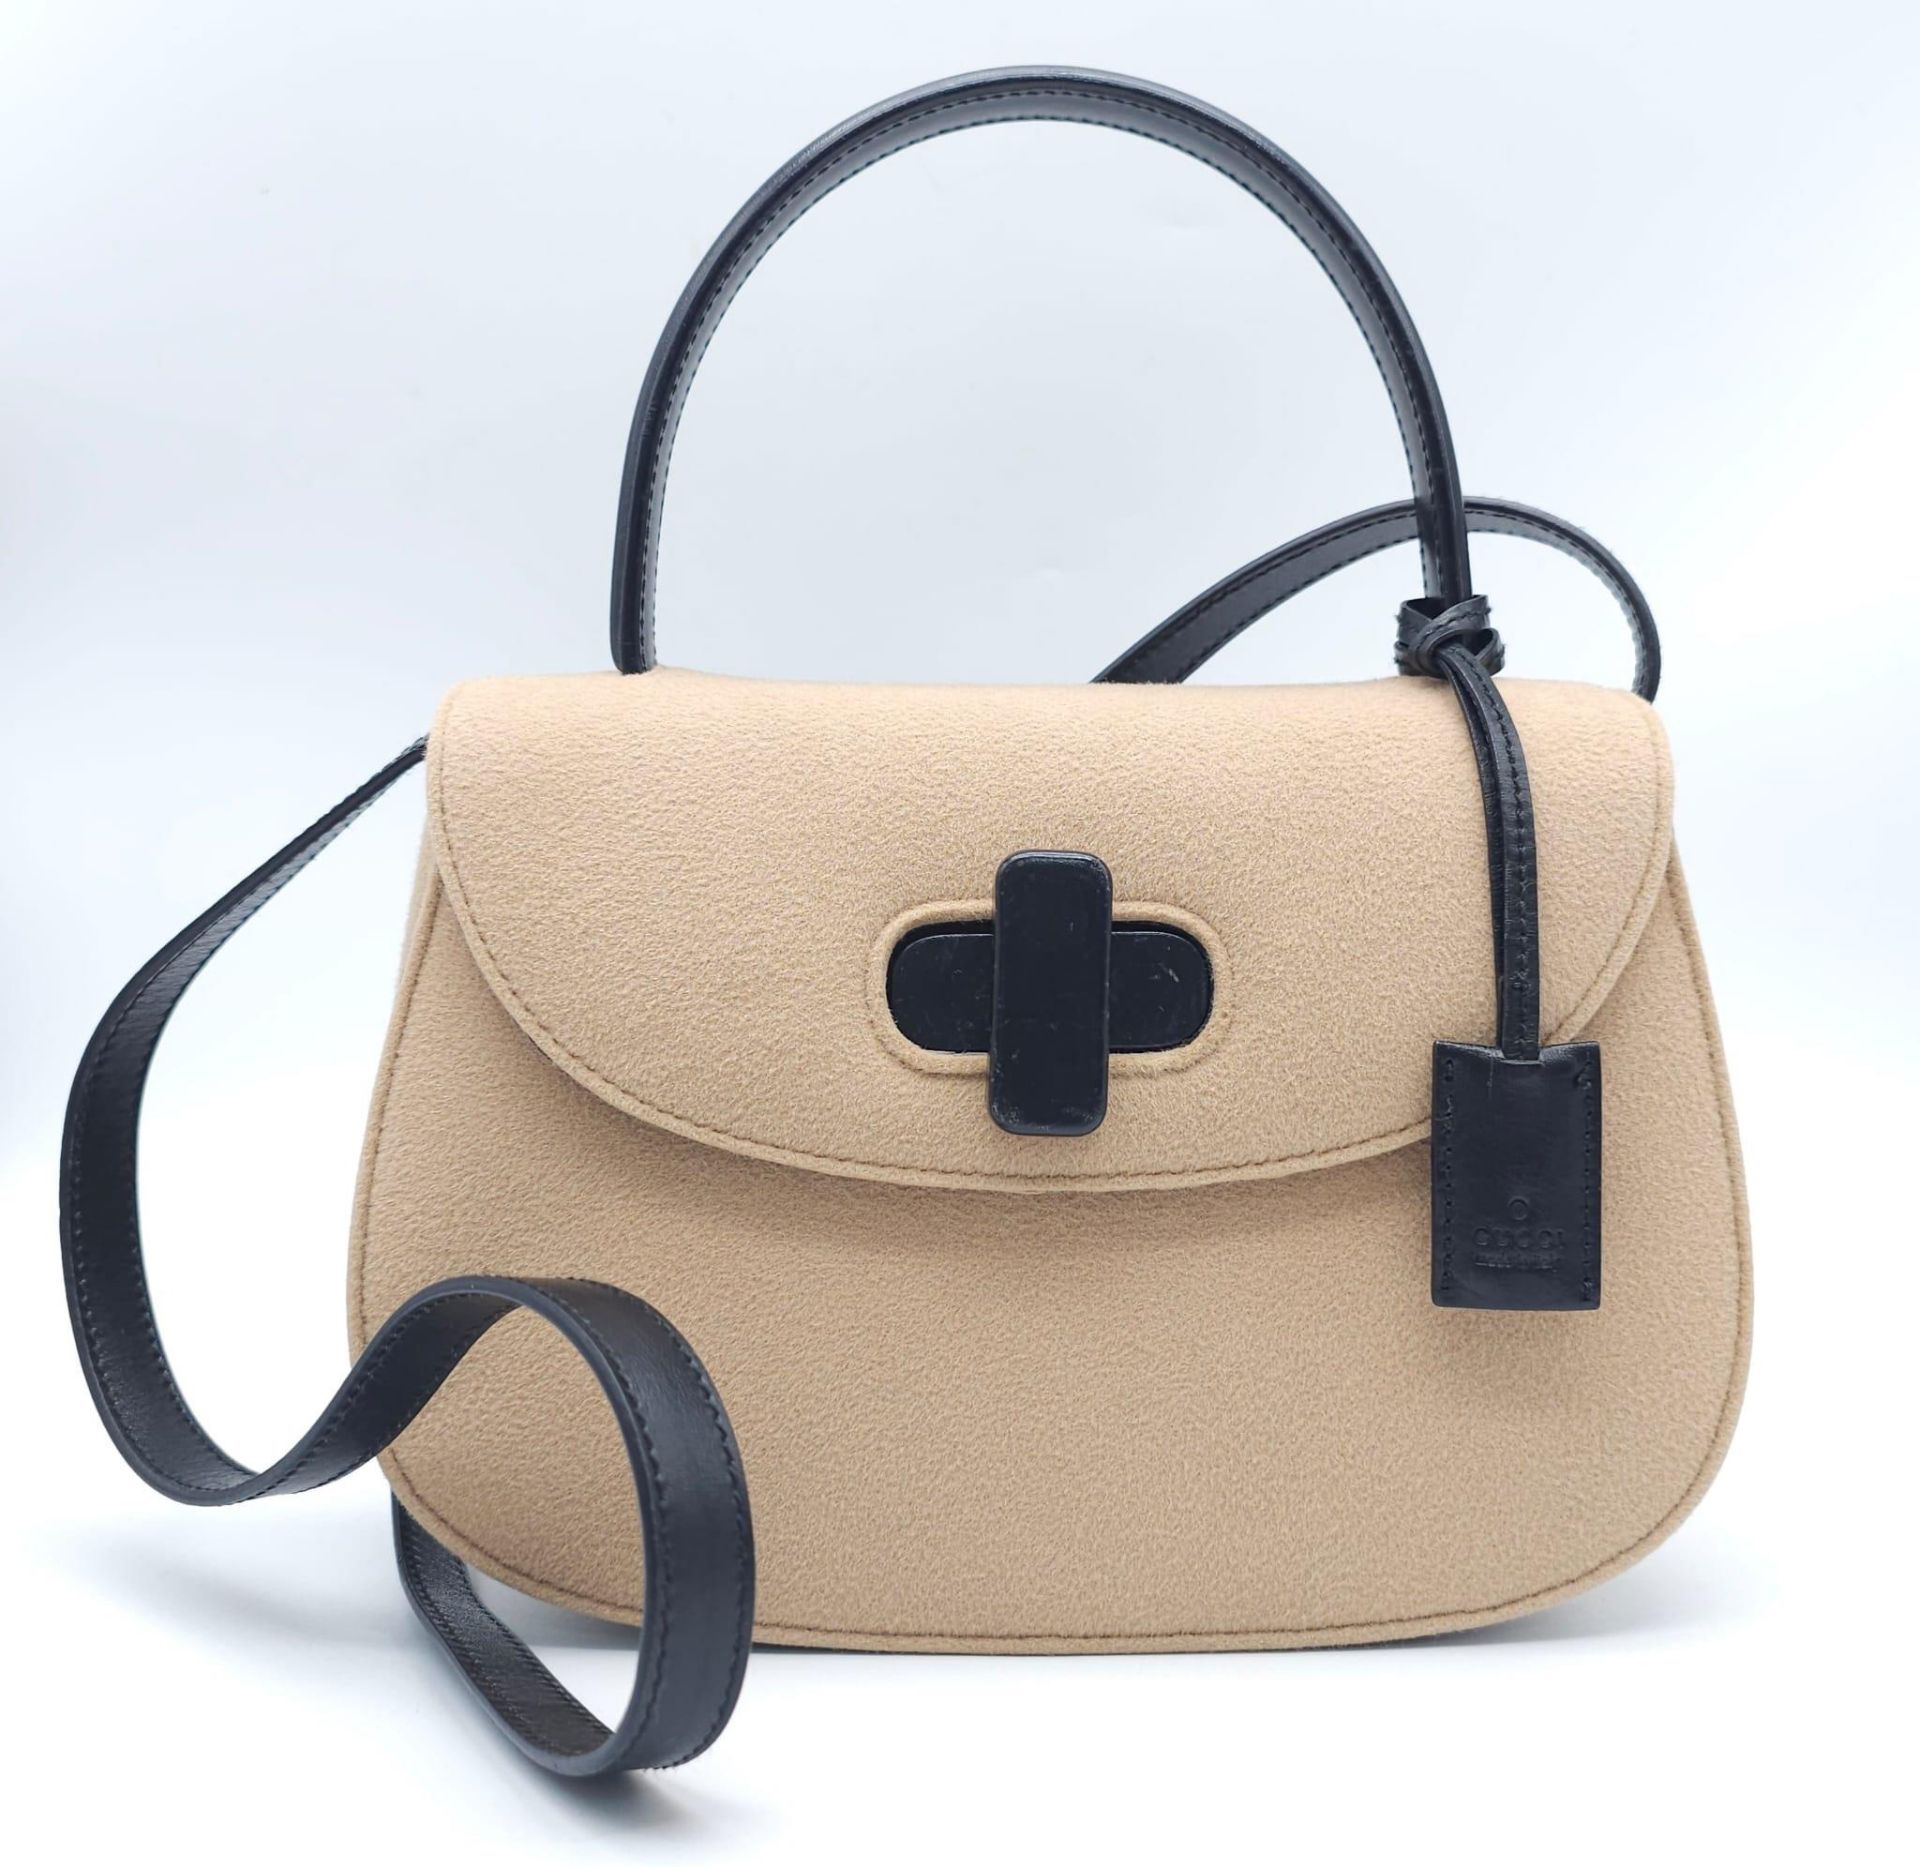 Gucci Tan Wool Purse. This Gucci tan wool purse features a black bar closure, black leather